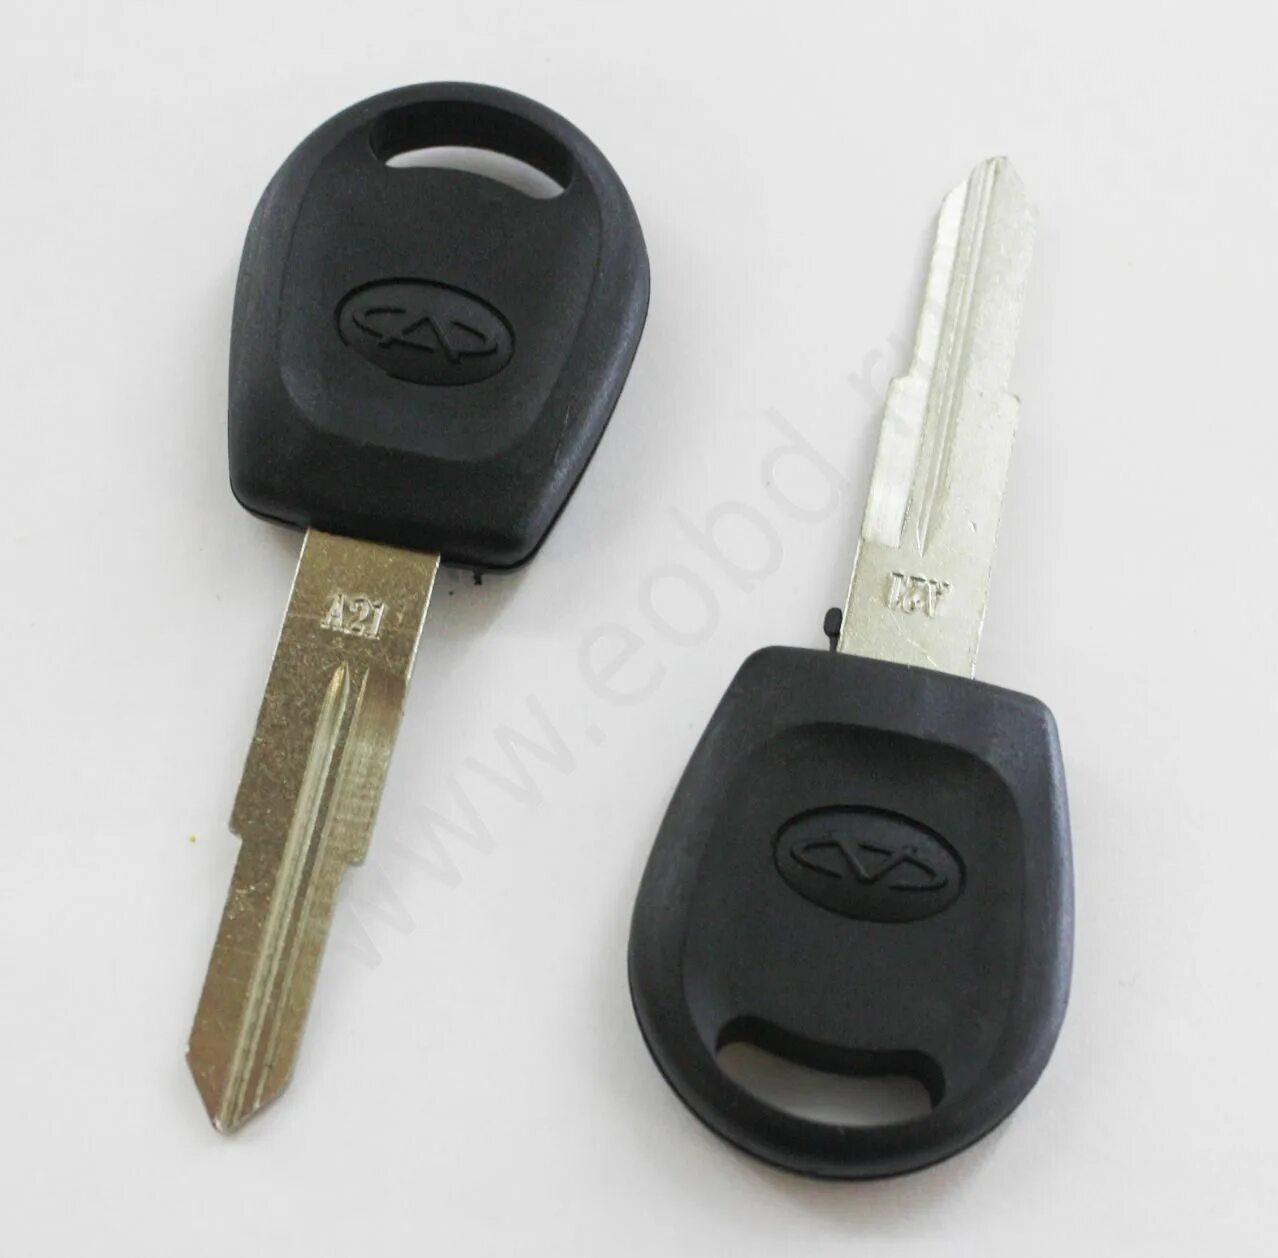 14 fora. Чип ключ для чери Тиго2.4. Chery indis ключ зажигания. Выкидной ключ для автомобиля Chery Tiggo t 11. Брелок с иммобилайзером для Chery Tiggo t11.